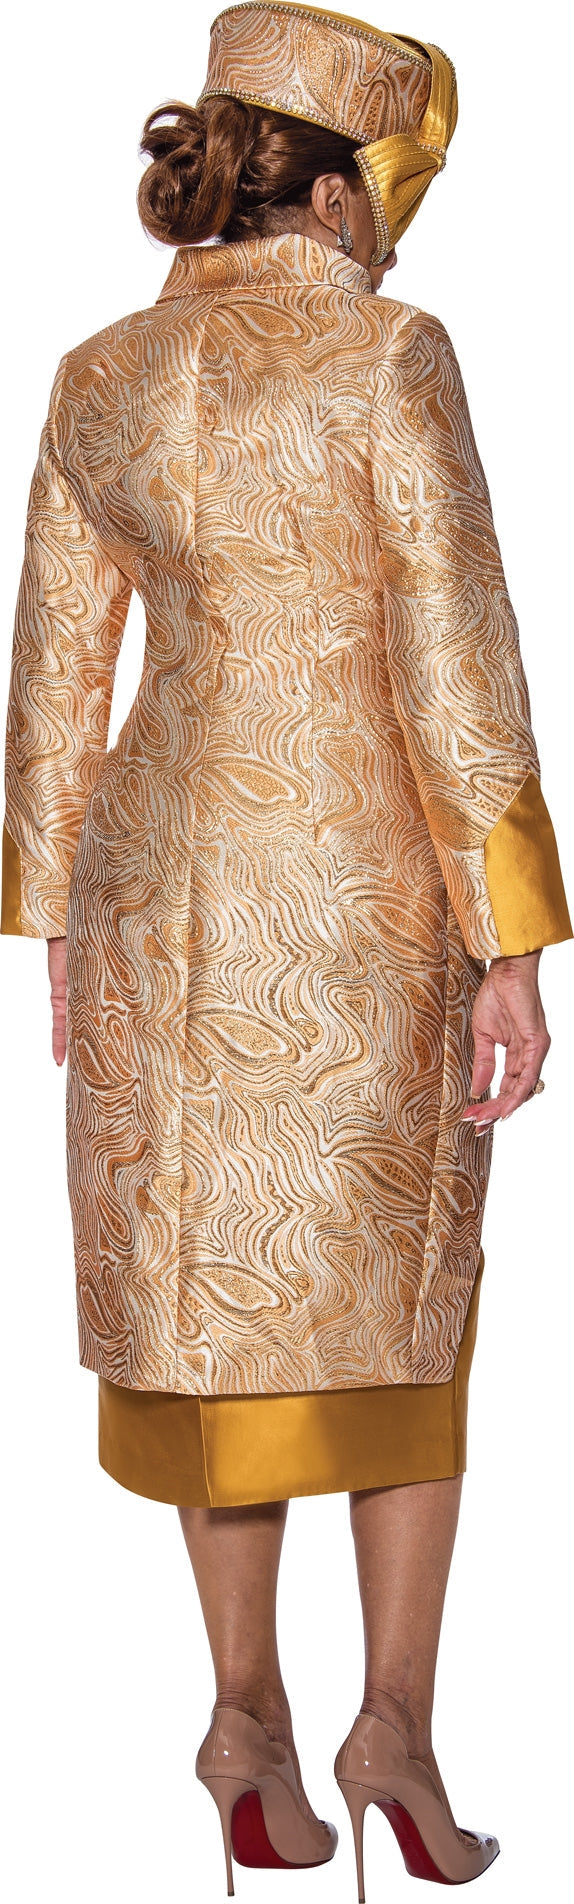 Dorinda Clark Cole Dress 5192 - Church Suits For Less